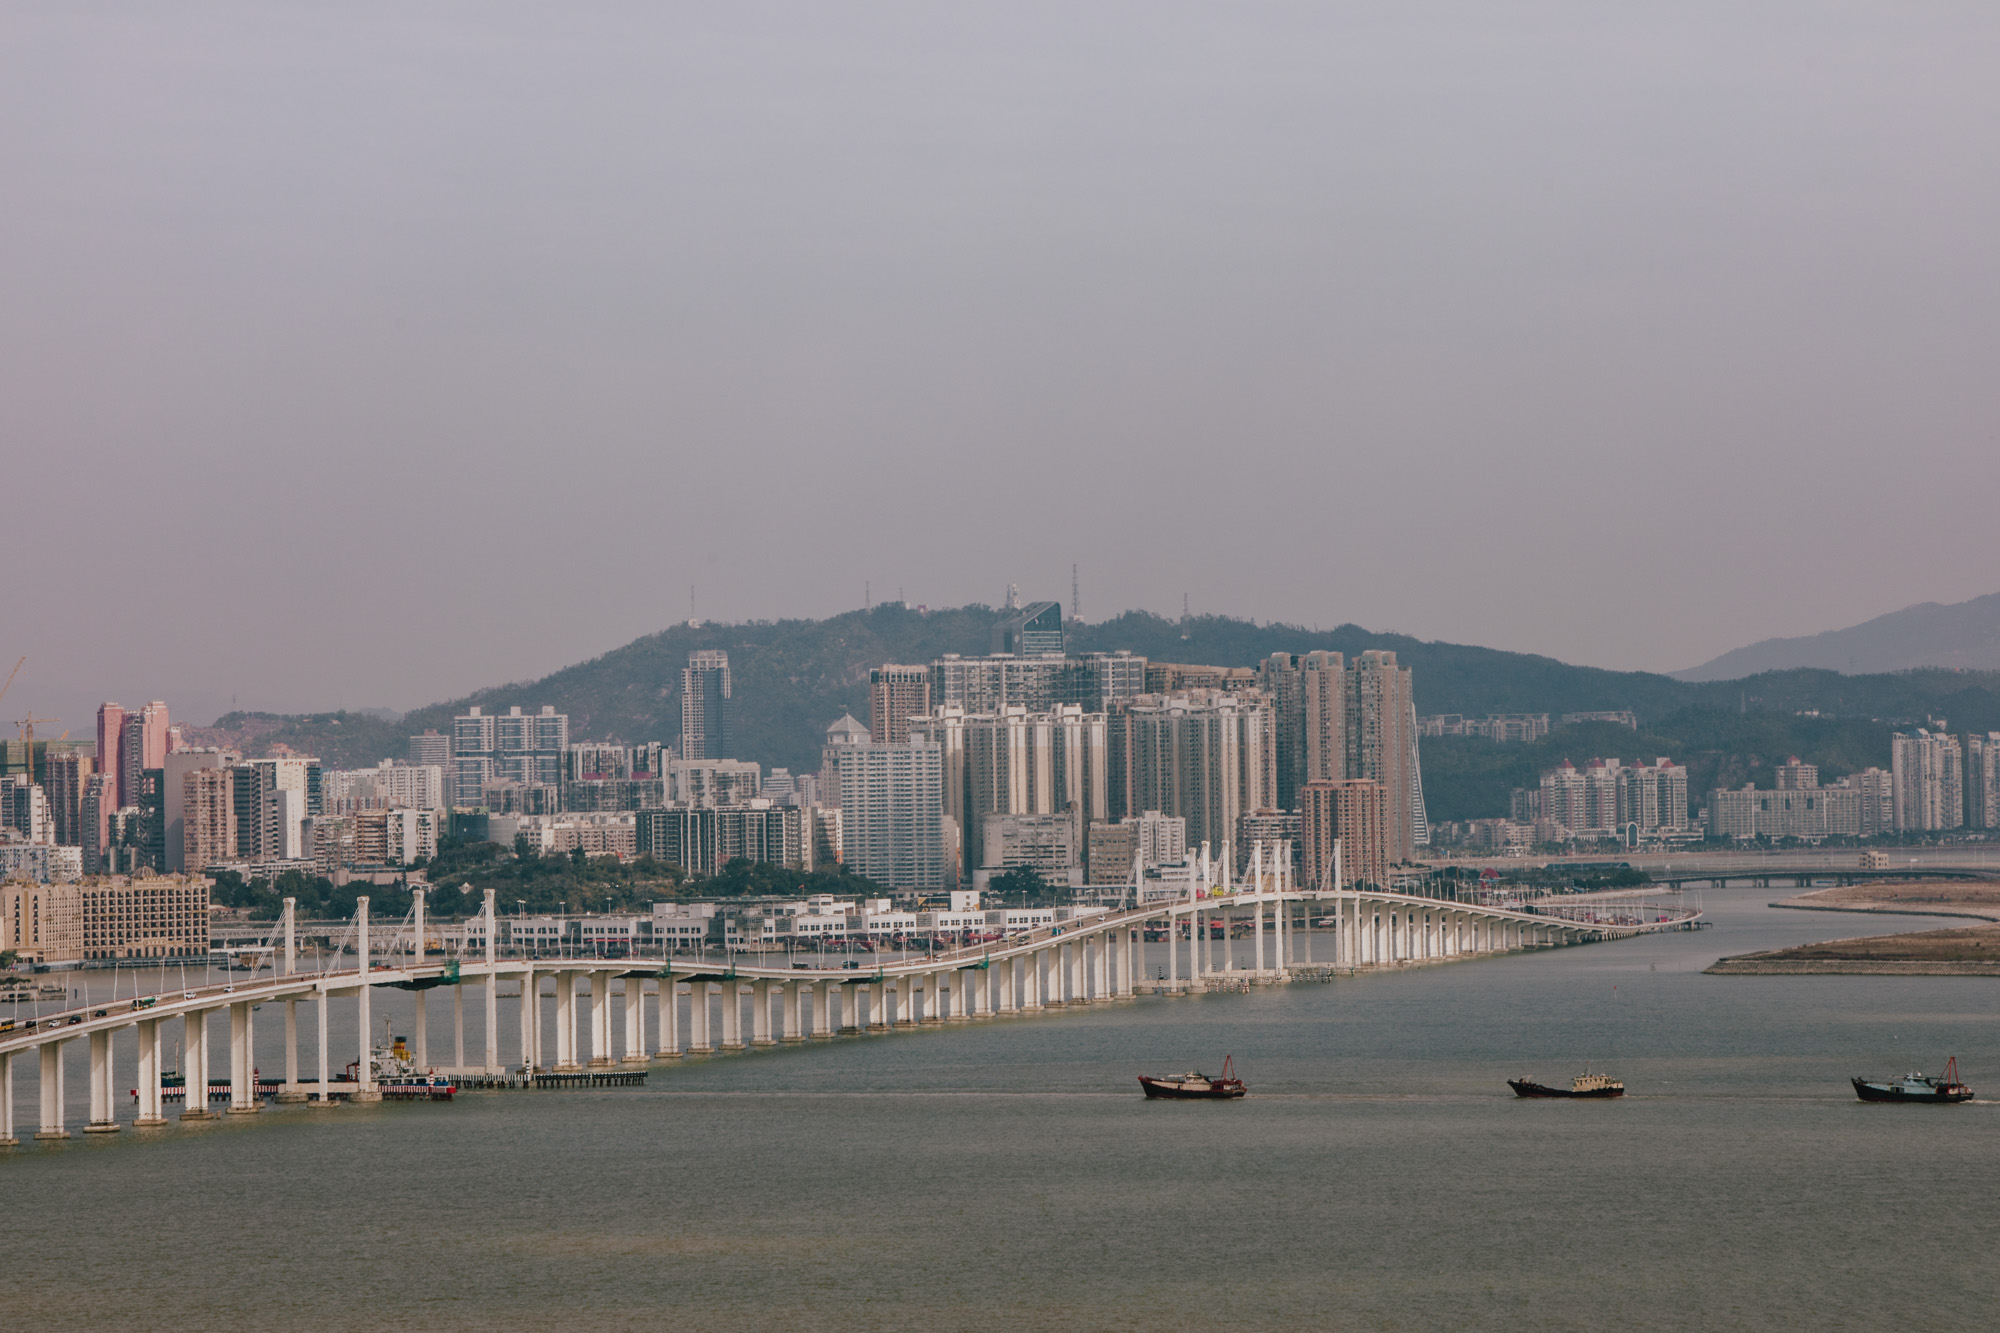 Amizade Bridge (Friendship Bridge) with boats Macau Lifestyle